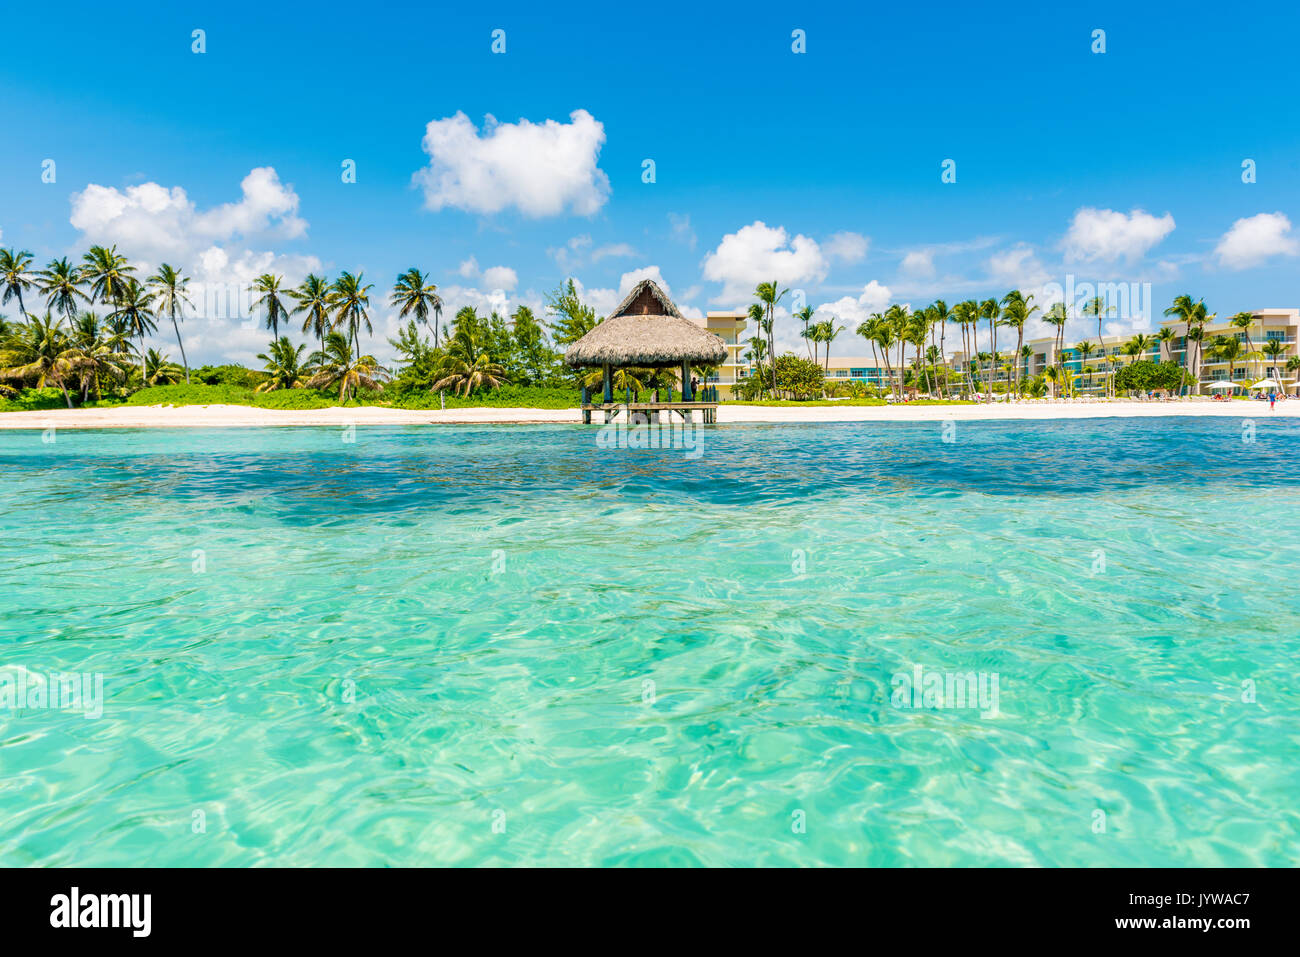 Playa Blanca, Punta Cana, República Dominicana, Mar Caribe. Choza de paja en la playa. Foto de stock